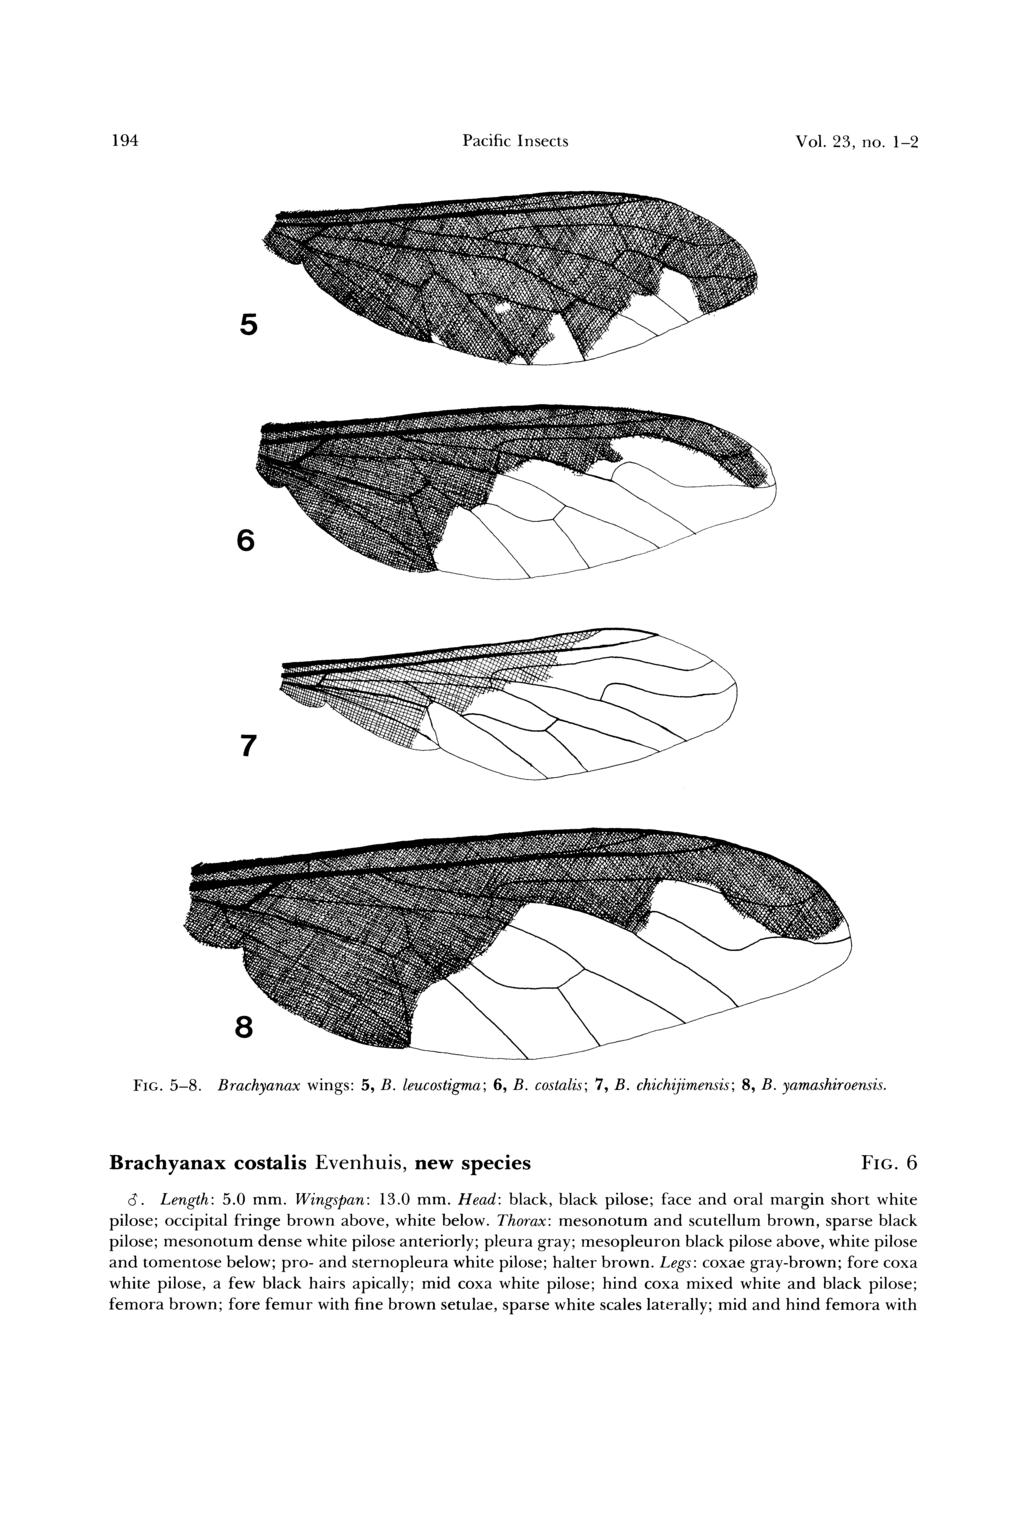 194 Pacific Insects Vol. 23, no. 1-2 FIG. 5-8. Brachyanax wings: 5, B. leucostigma; 6, B. costalis; 7, B. chichijimensis; 8, B. yamashiroensis. Brachyanax costalis Evenhuis, new species FIG. 6 8.